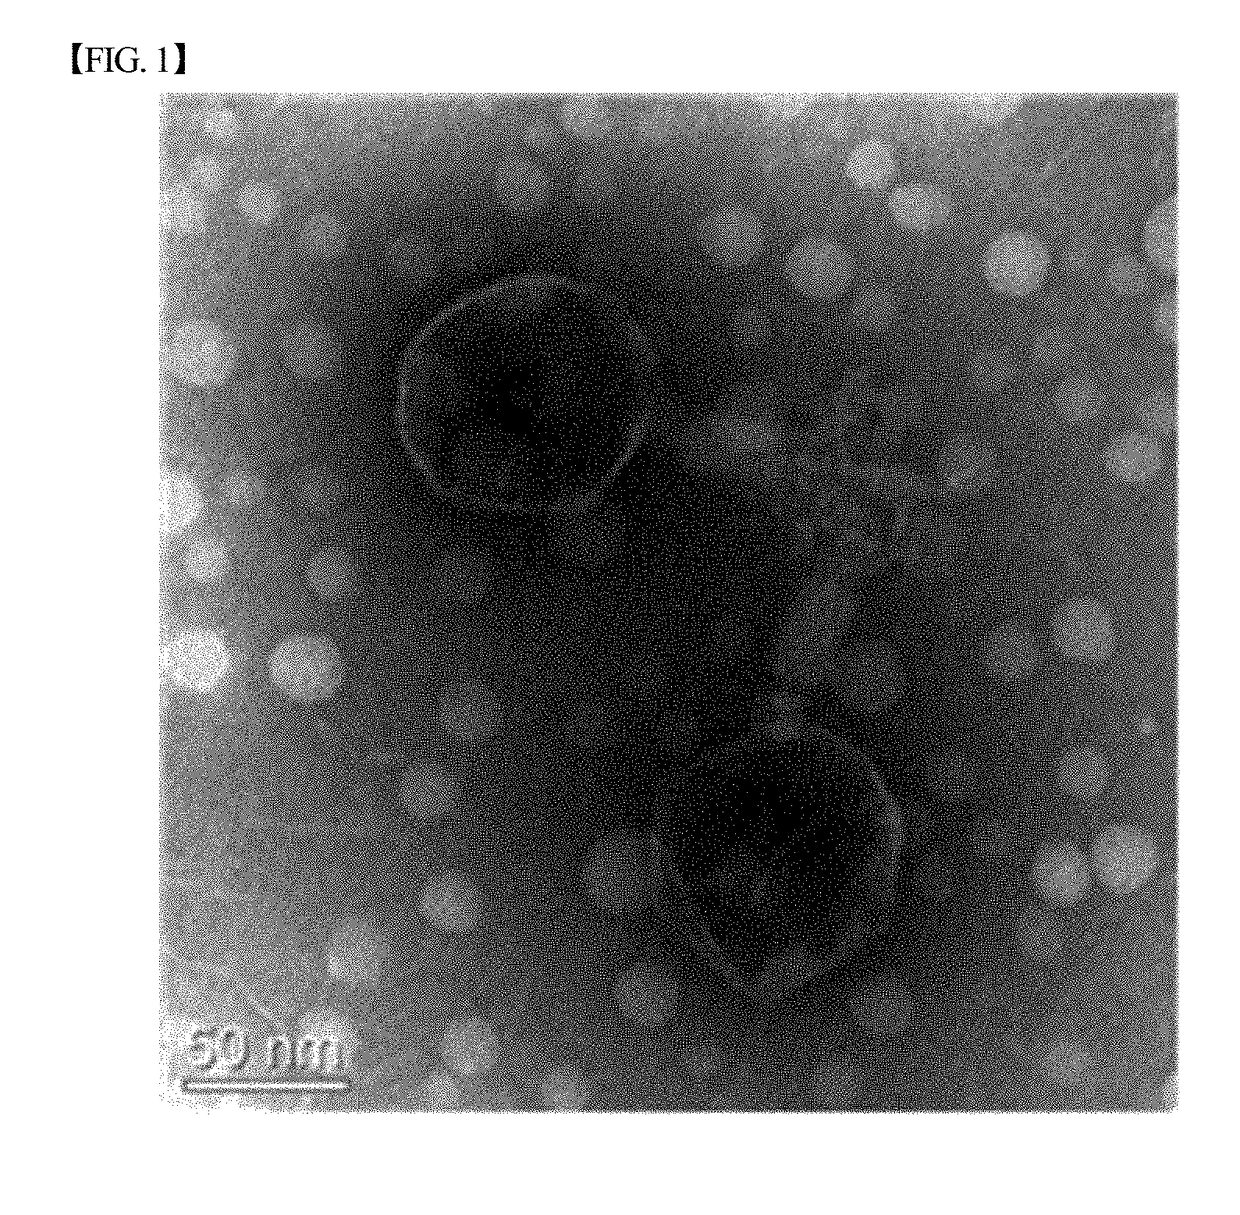 Novel pasteurella multocida bacteriophage pas-mup-1 and use thereof for inhibiting proliferation of pasteurella multocida